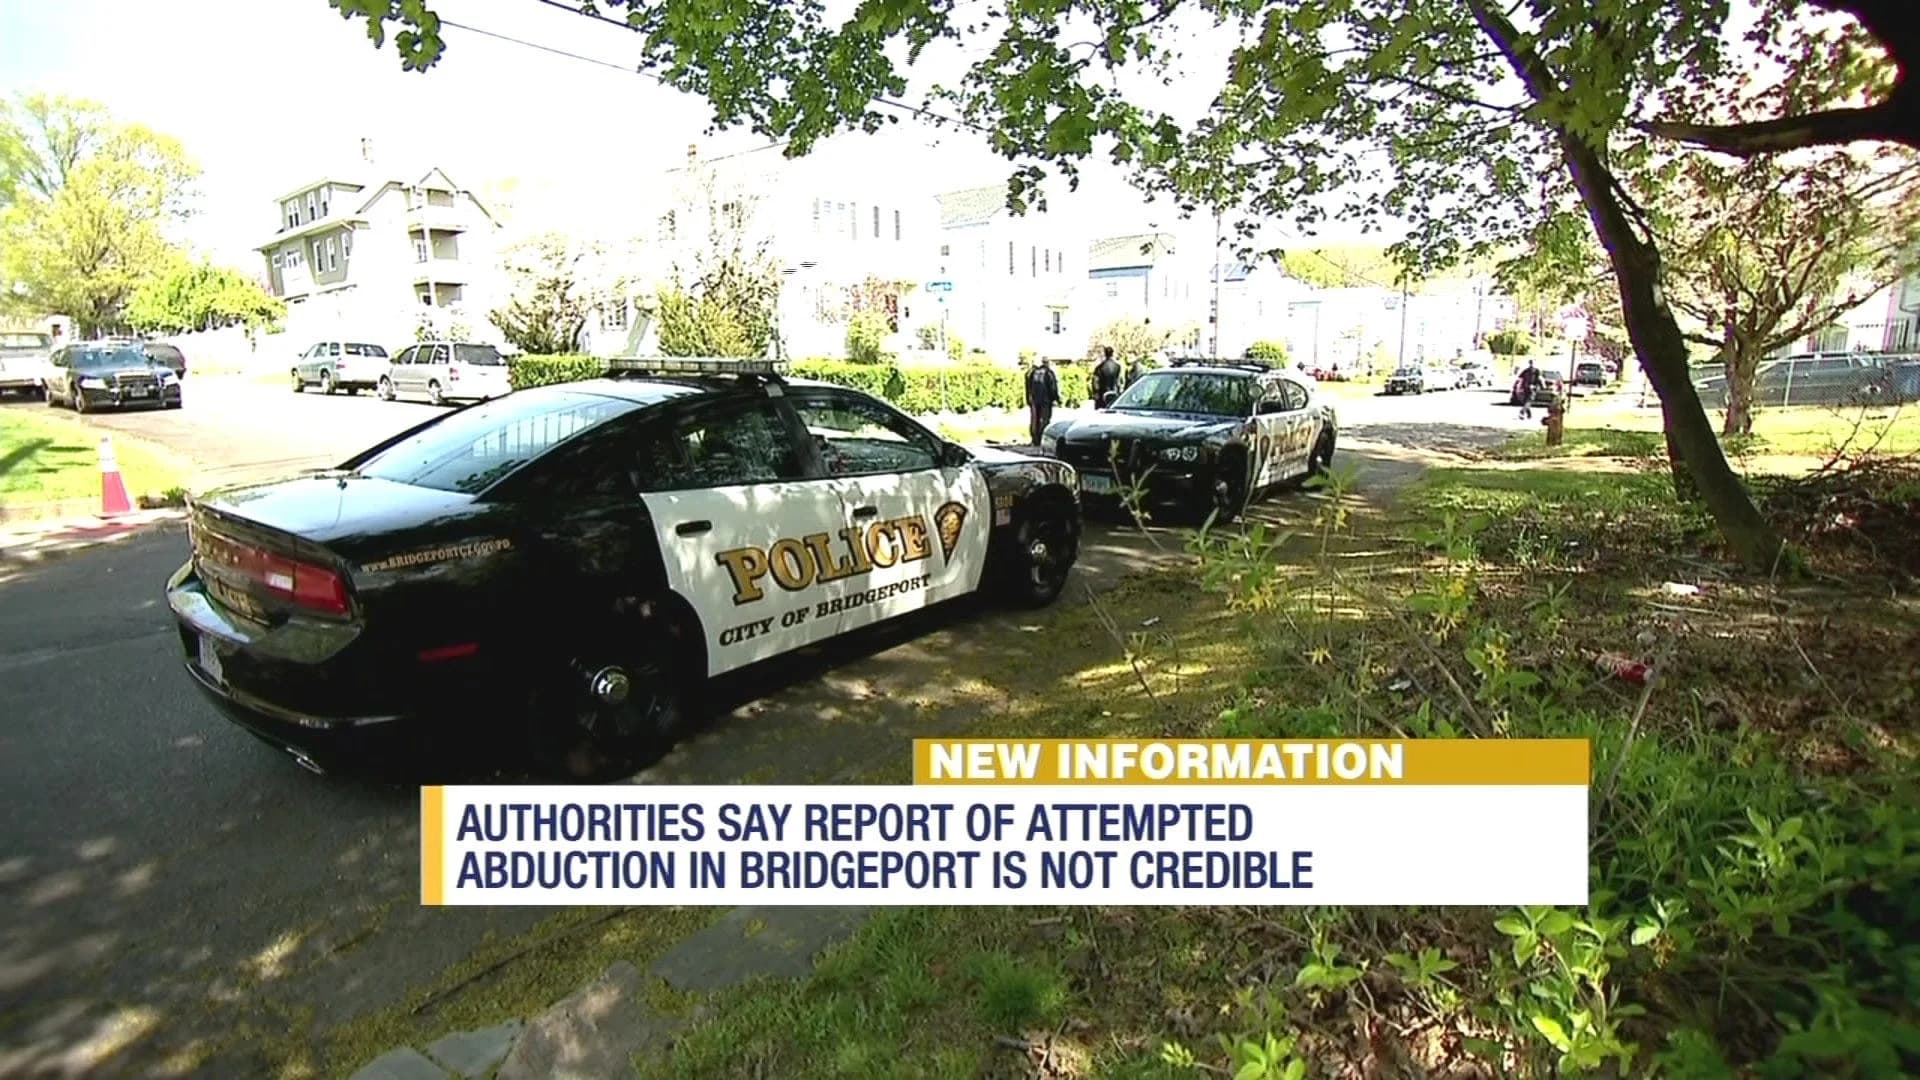 Bridgeport authorities say girl's abduction claim not credible